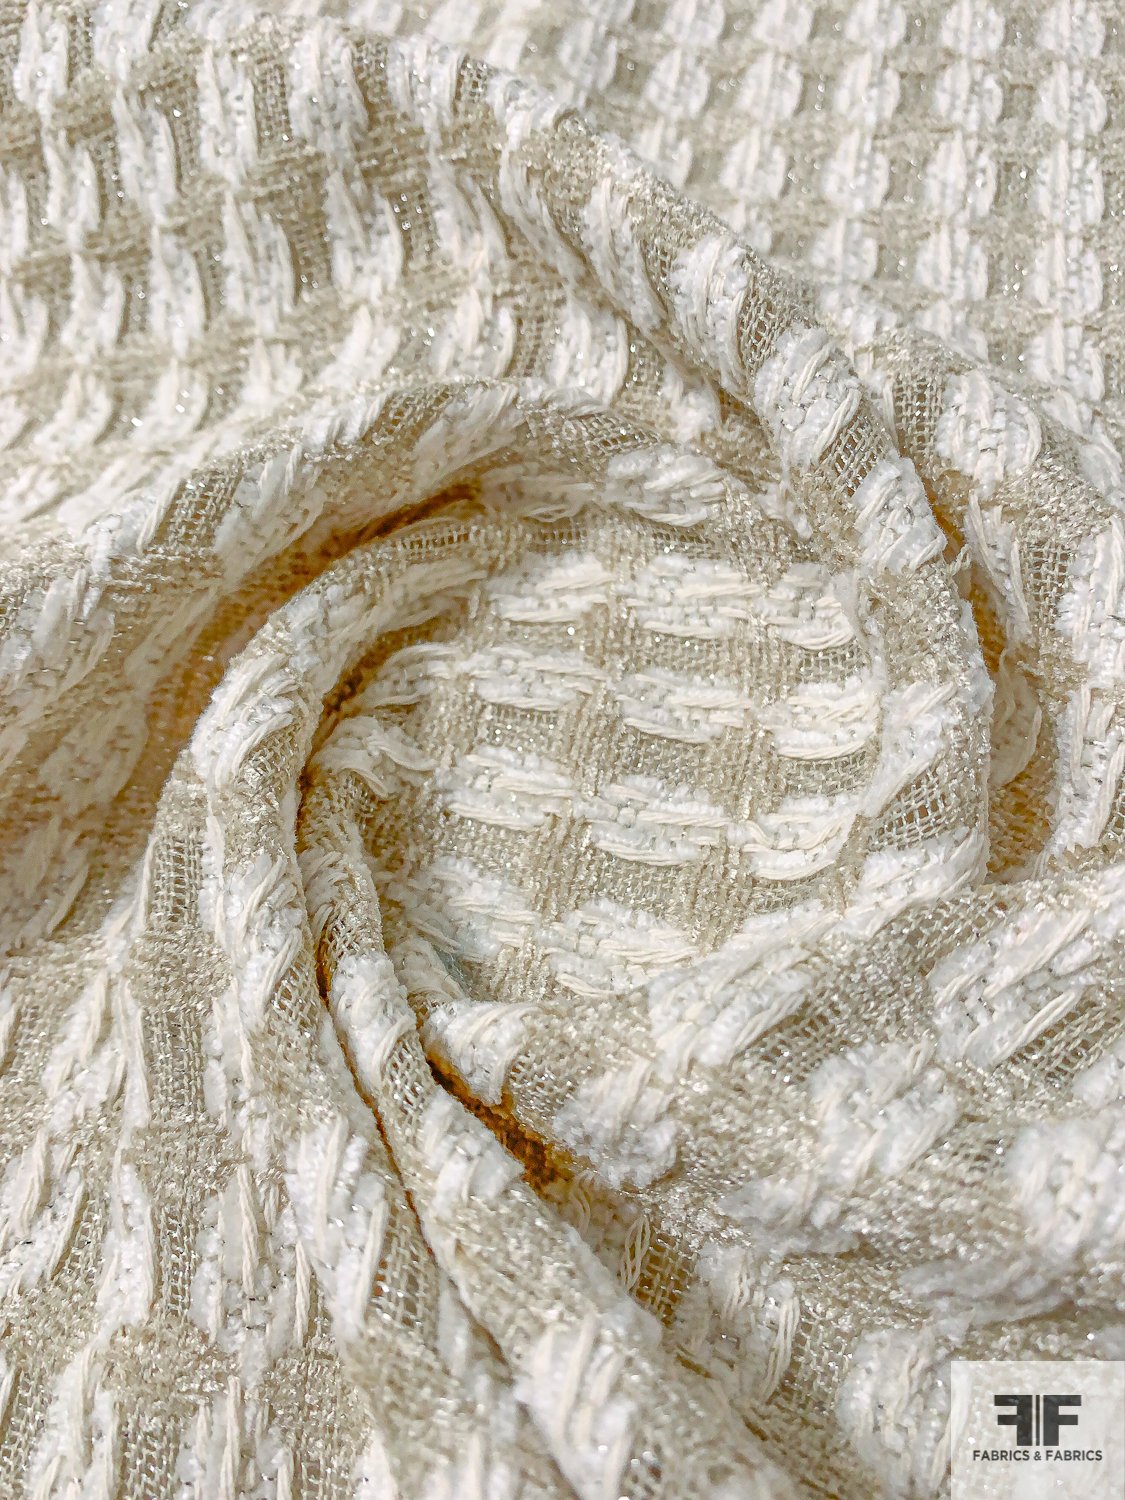 Italian Reversible Grid Striped Tweed Suiting with Lurex Fibers - Ivory / Ecru / Silver